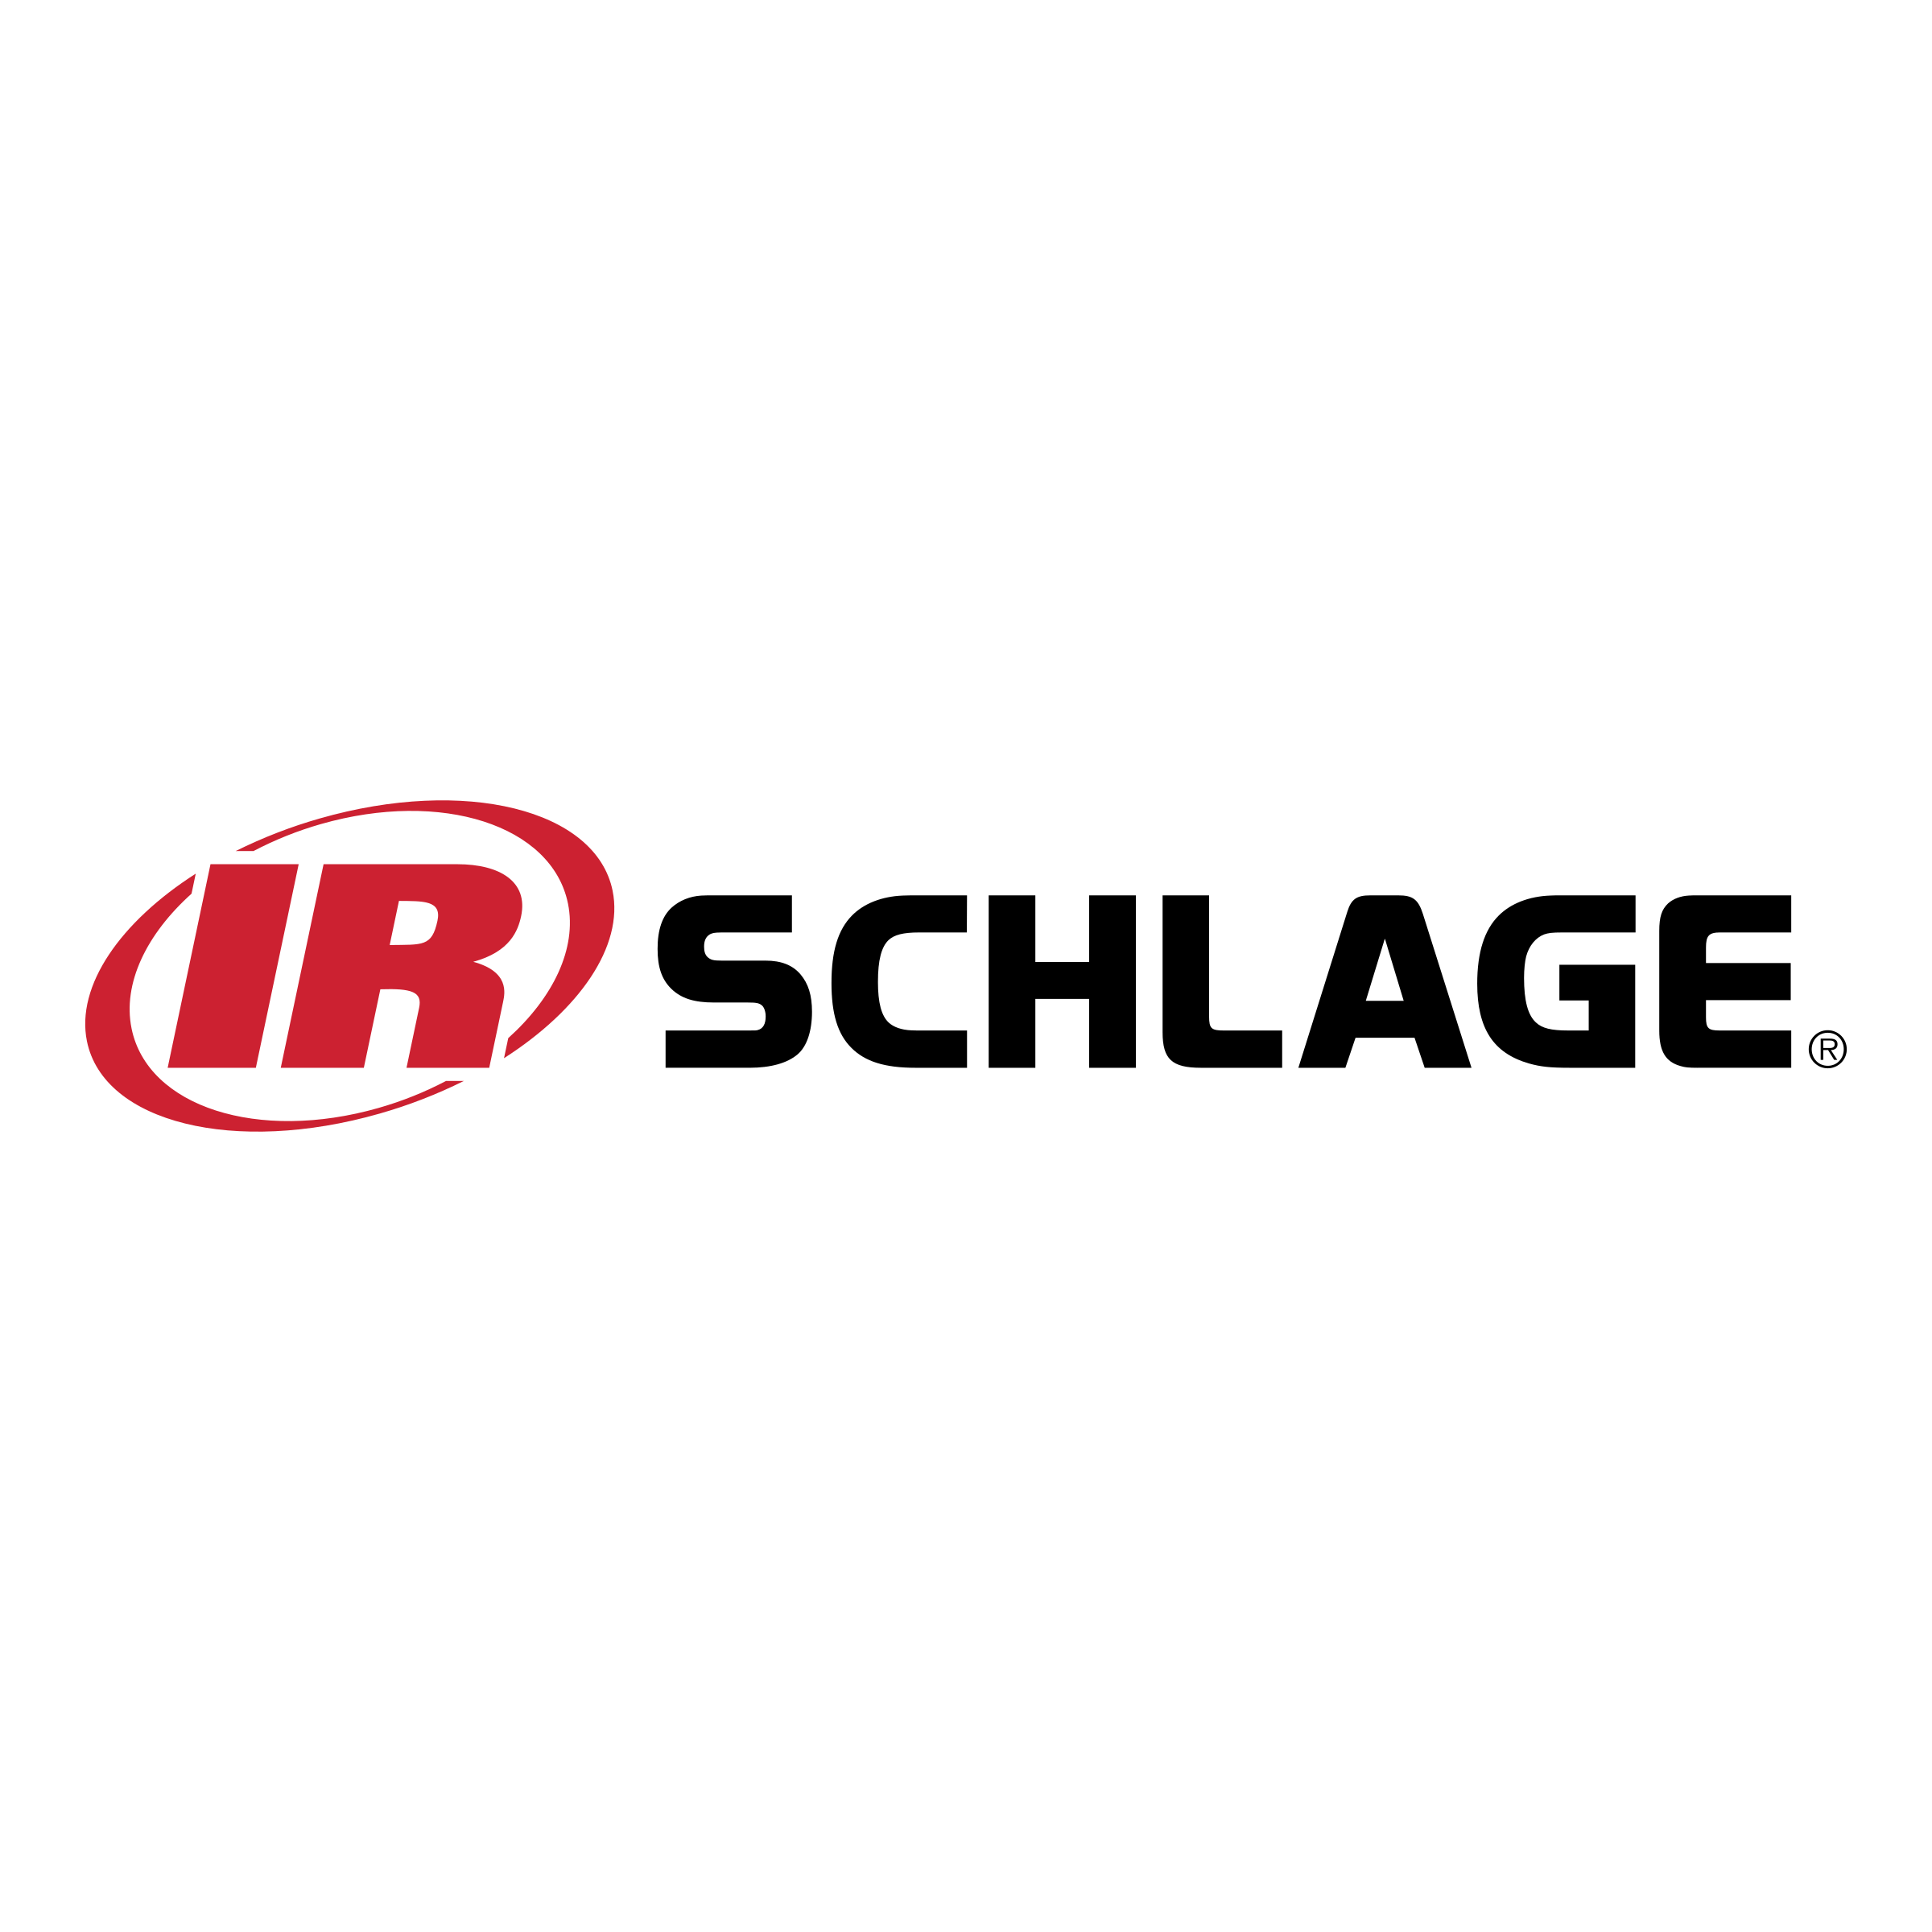 Schlage Logo - Schlage Logo PNG Transparent & SVG Vector - Freebie Supply